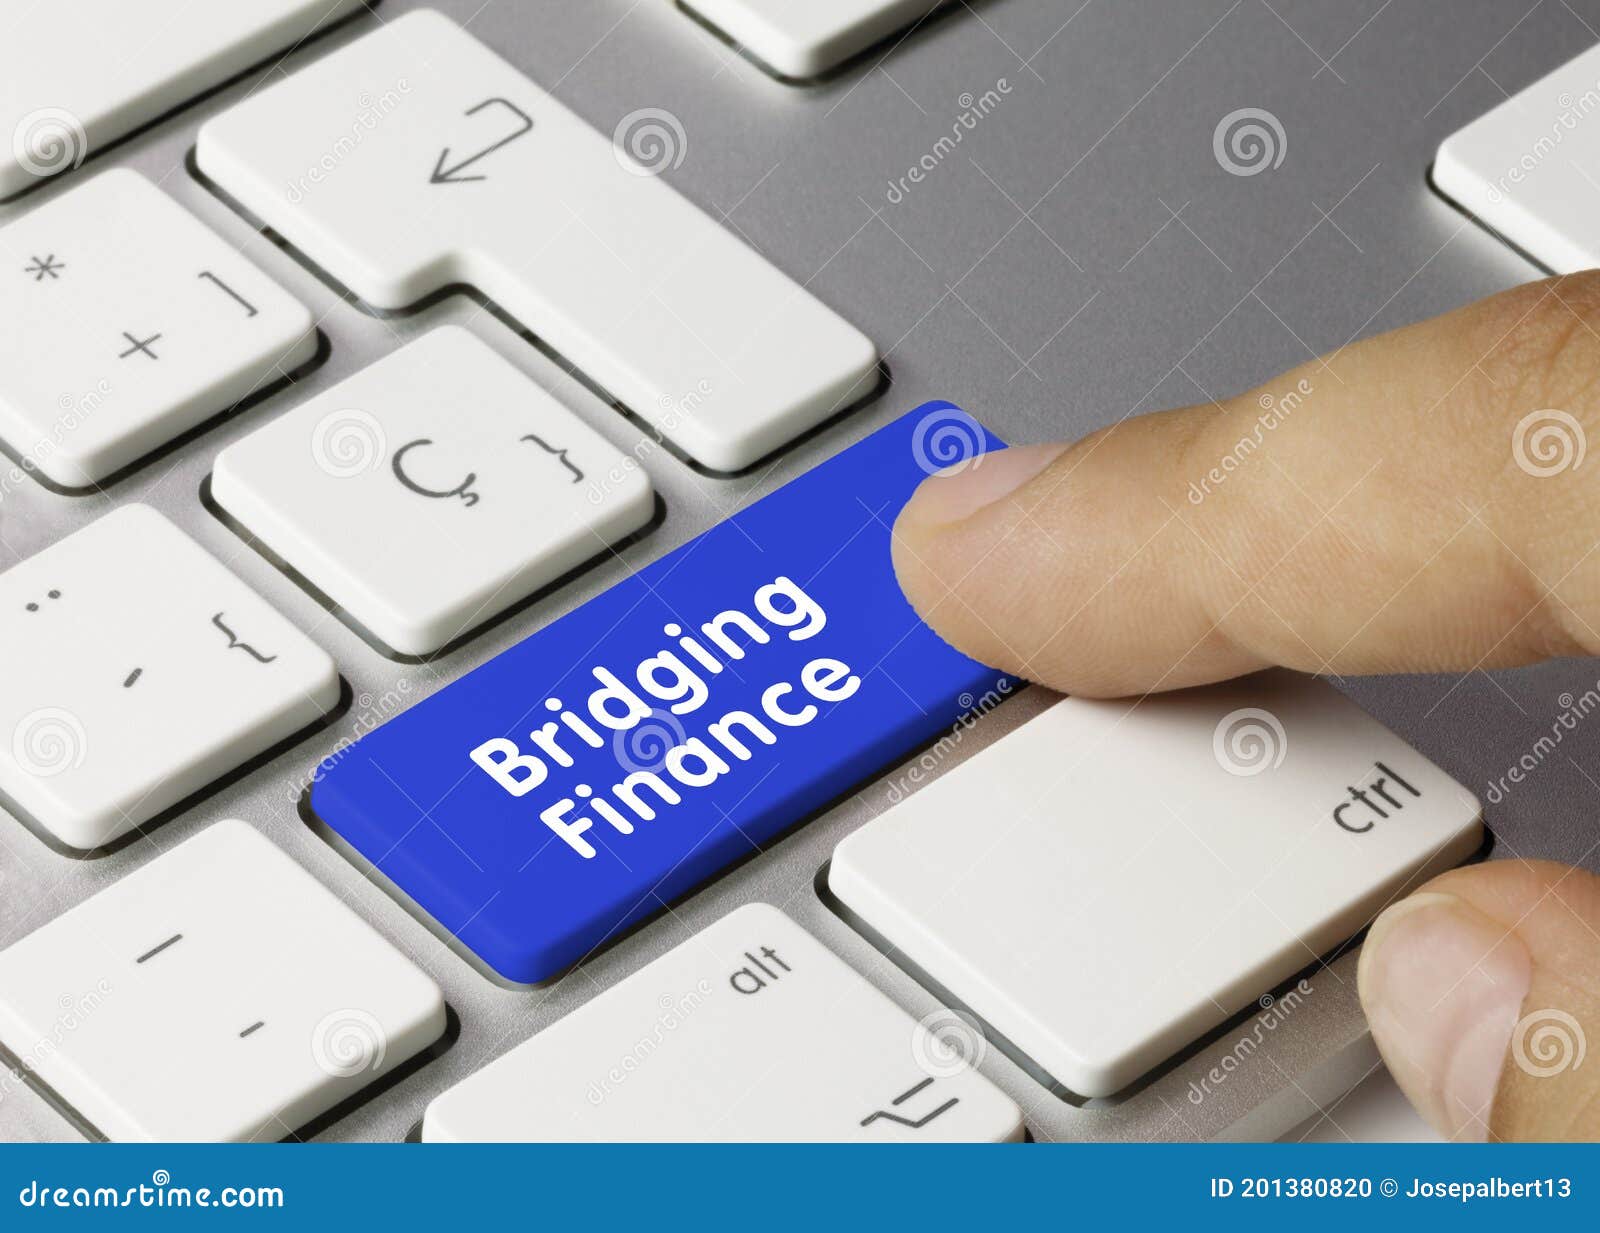 bridging finance - inscription on blue keyboard key